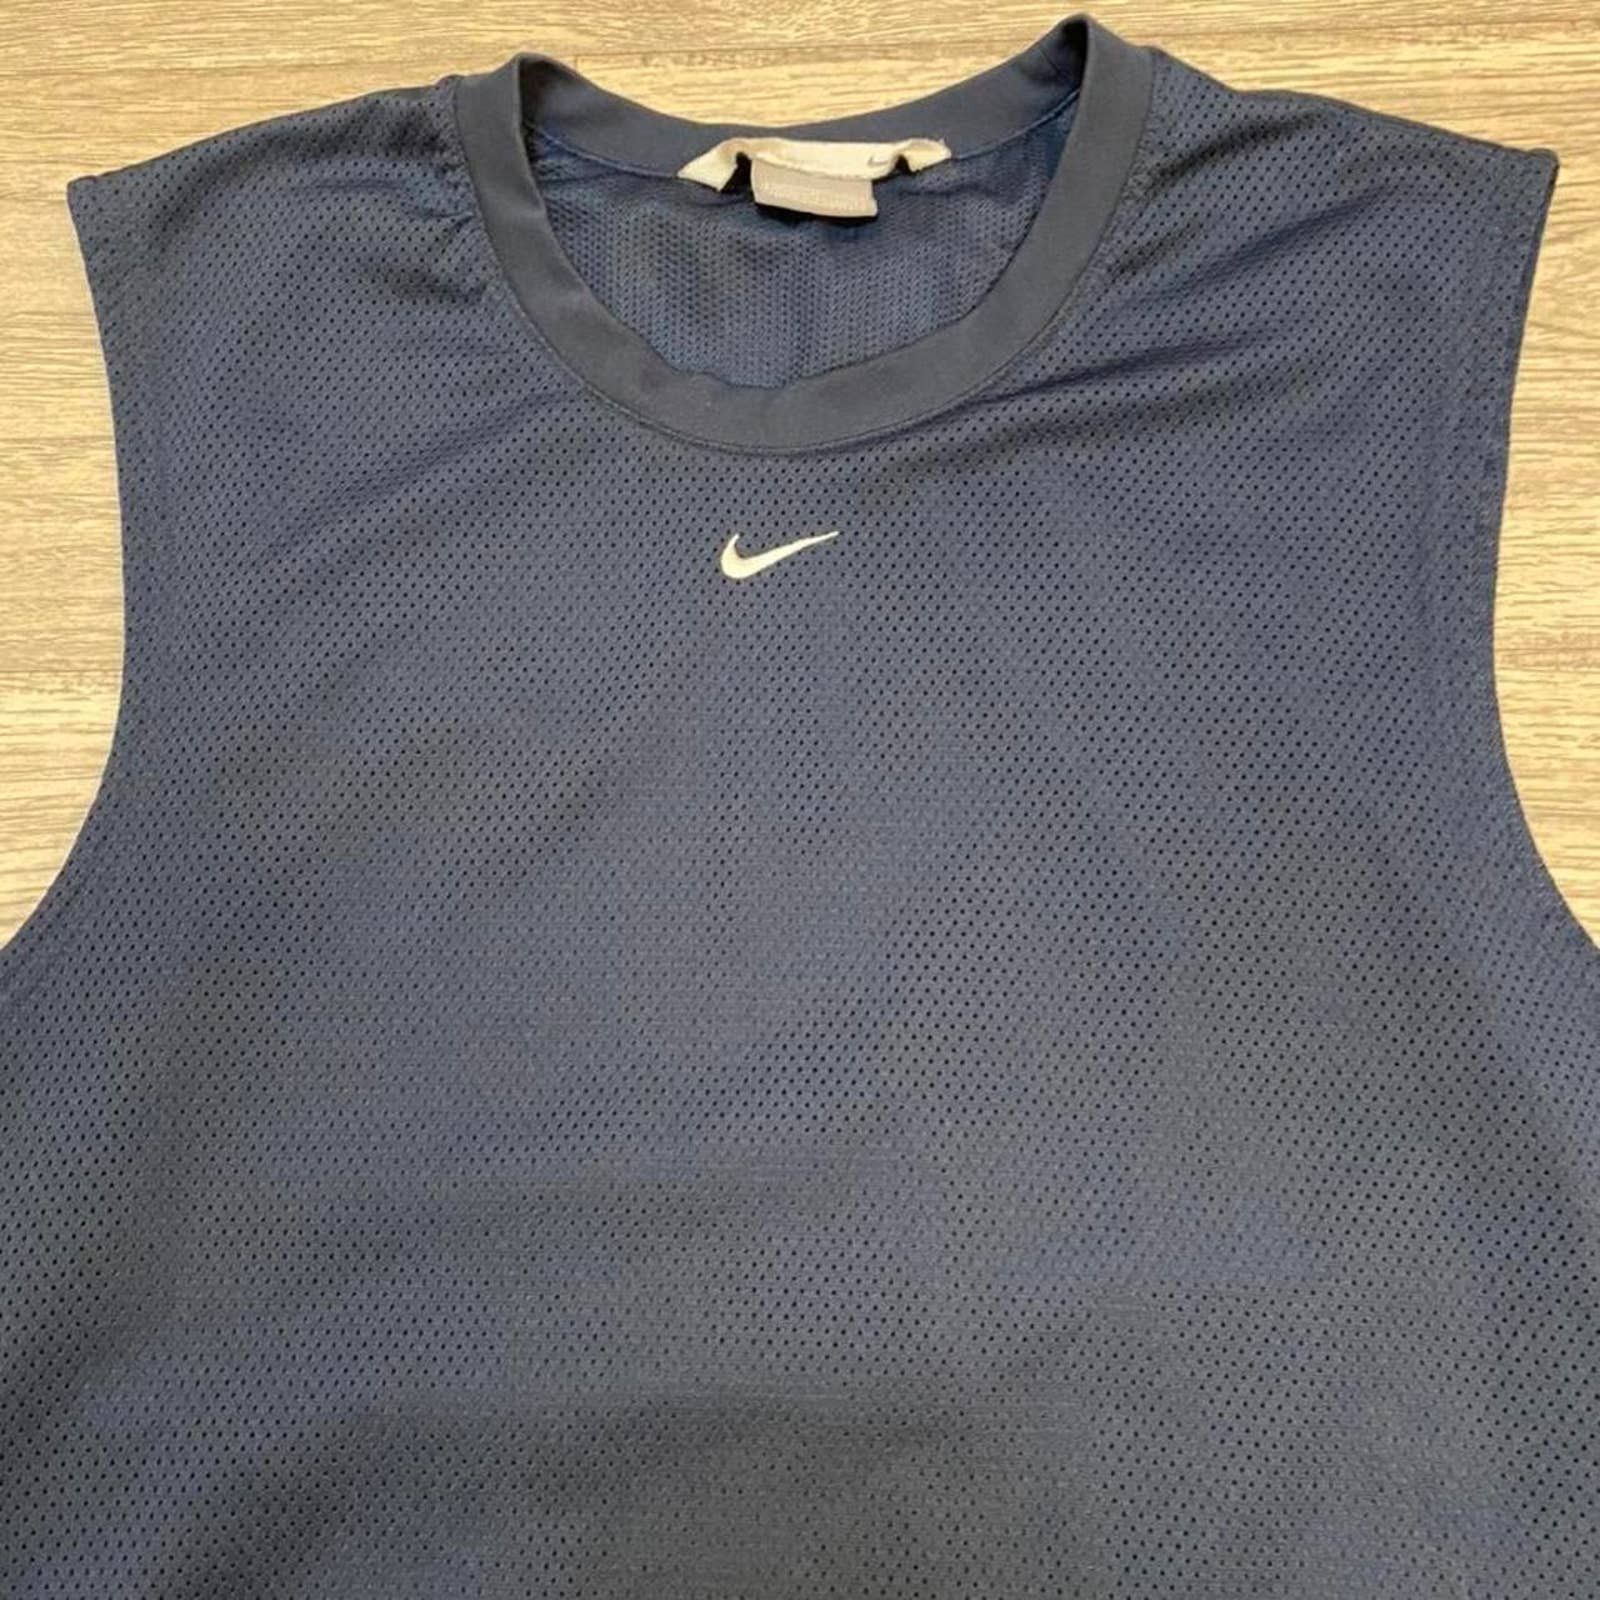 Nike Vintage Nike Sleeveless Shirt Center Swoosh Medium Size US M / EU 48-50 / 2 - 2 Preview